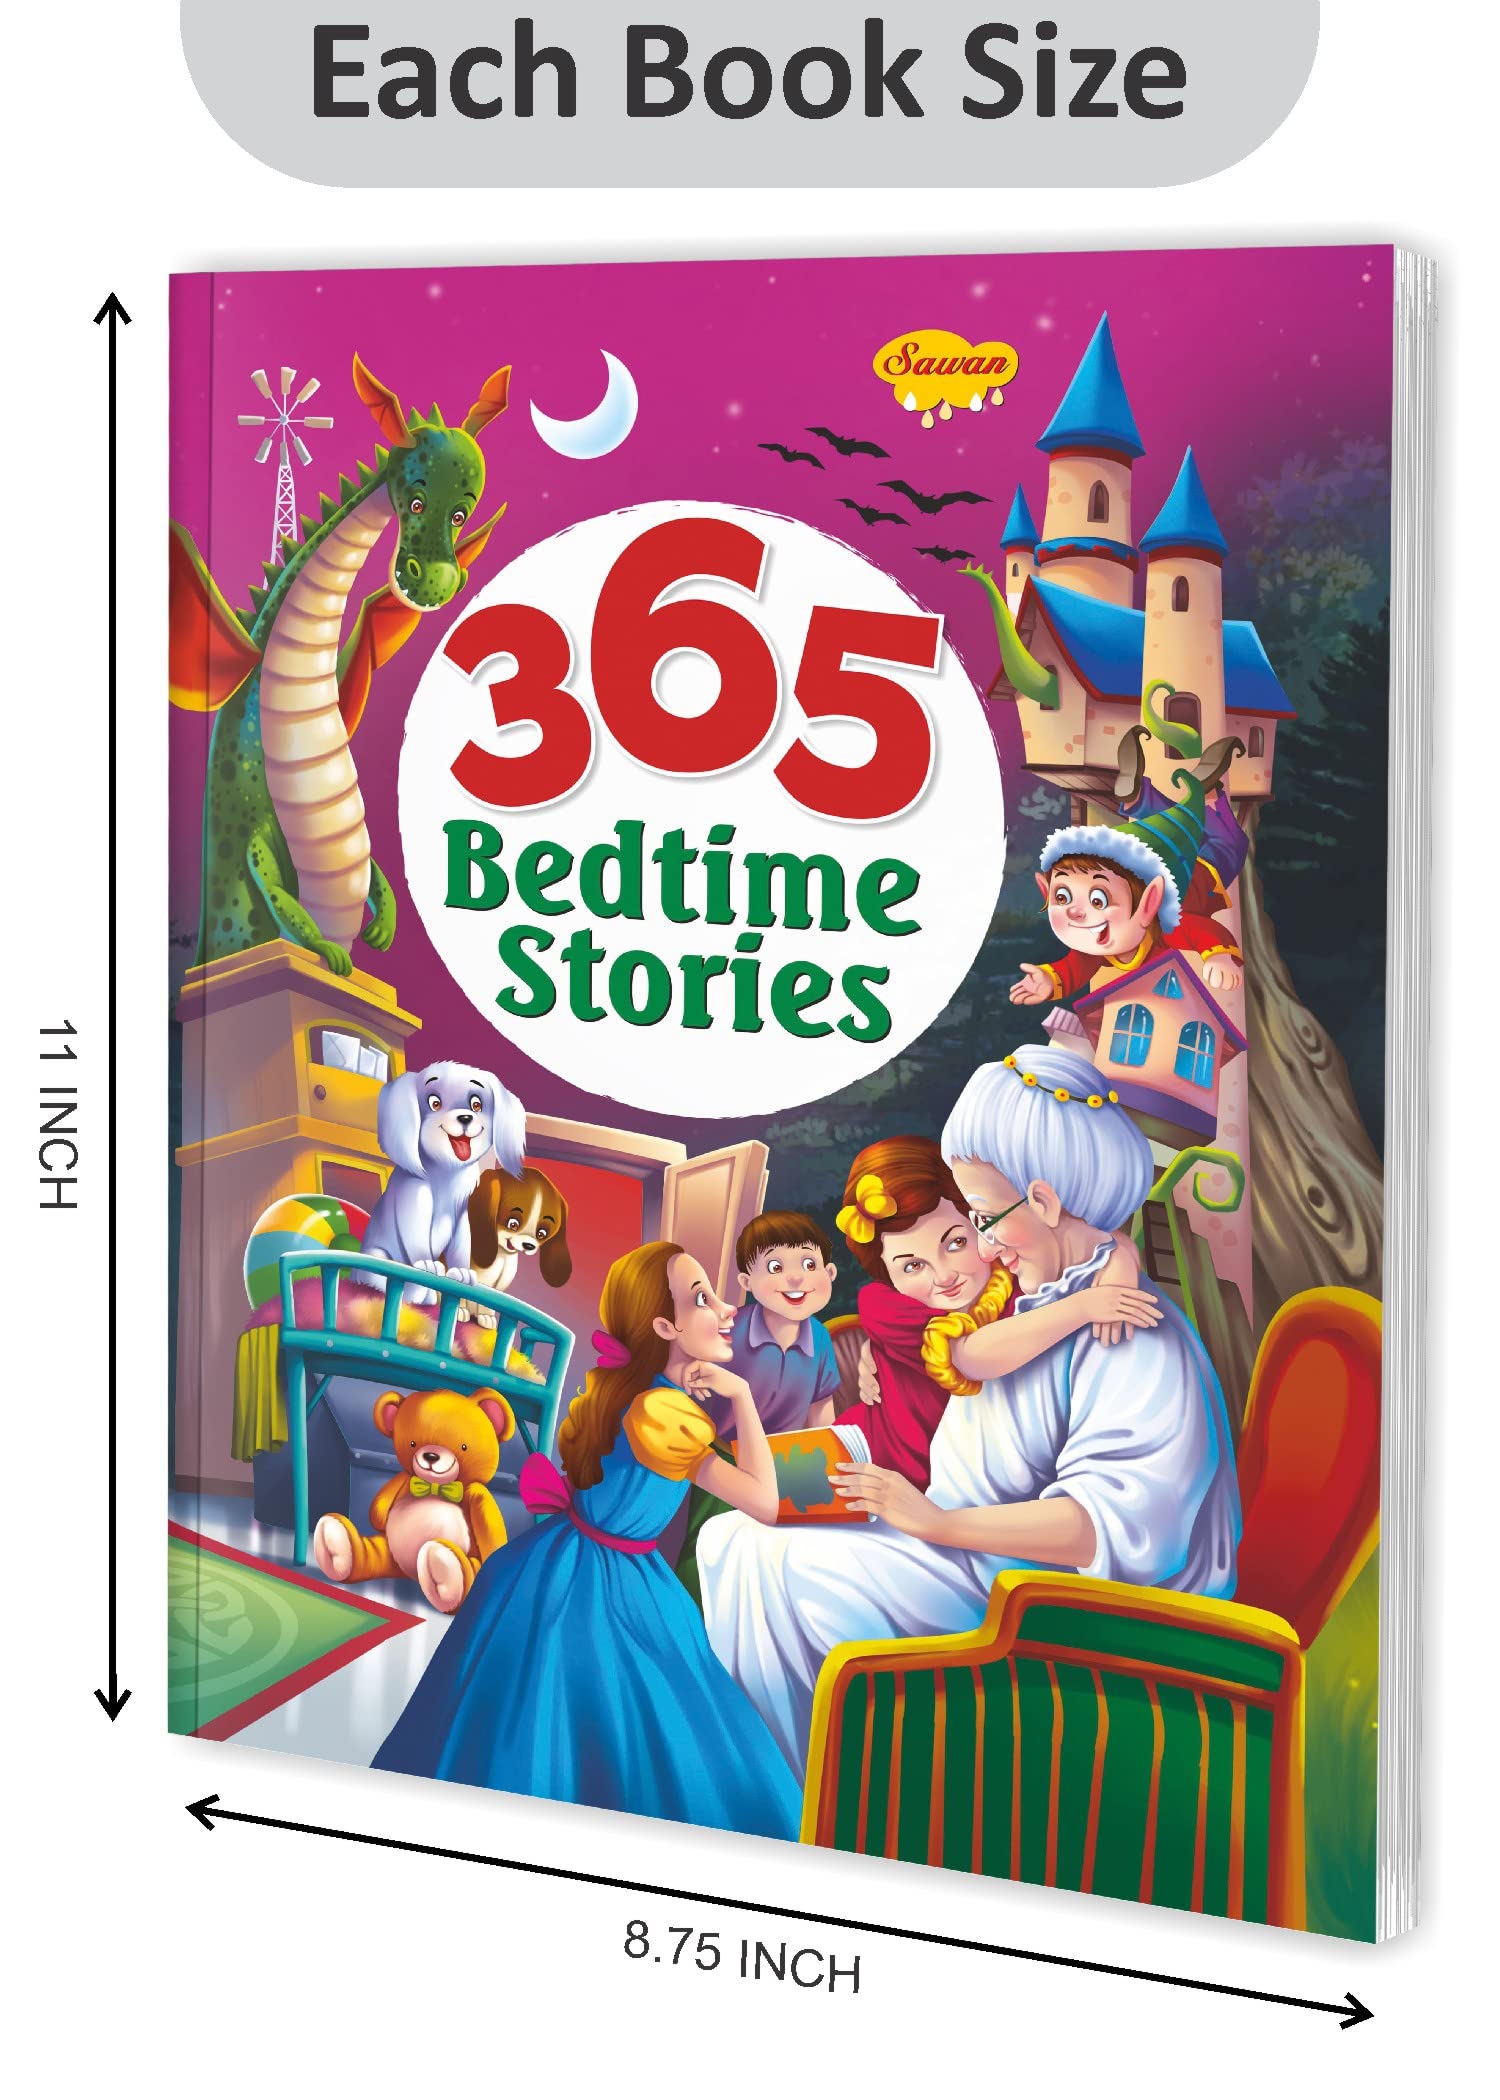 365 Bedtime Stories -Paperback